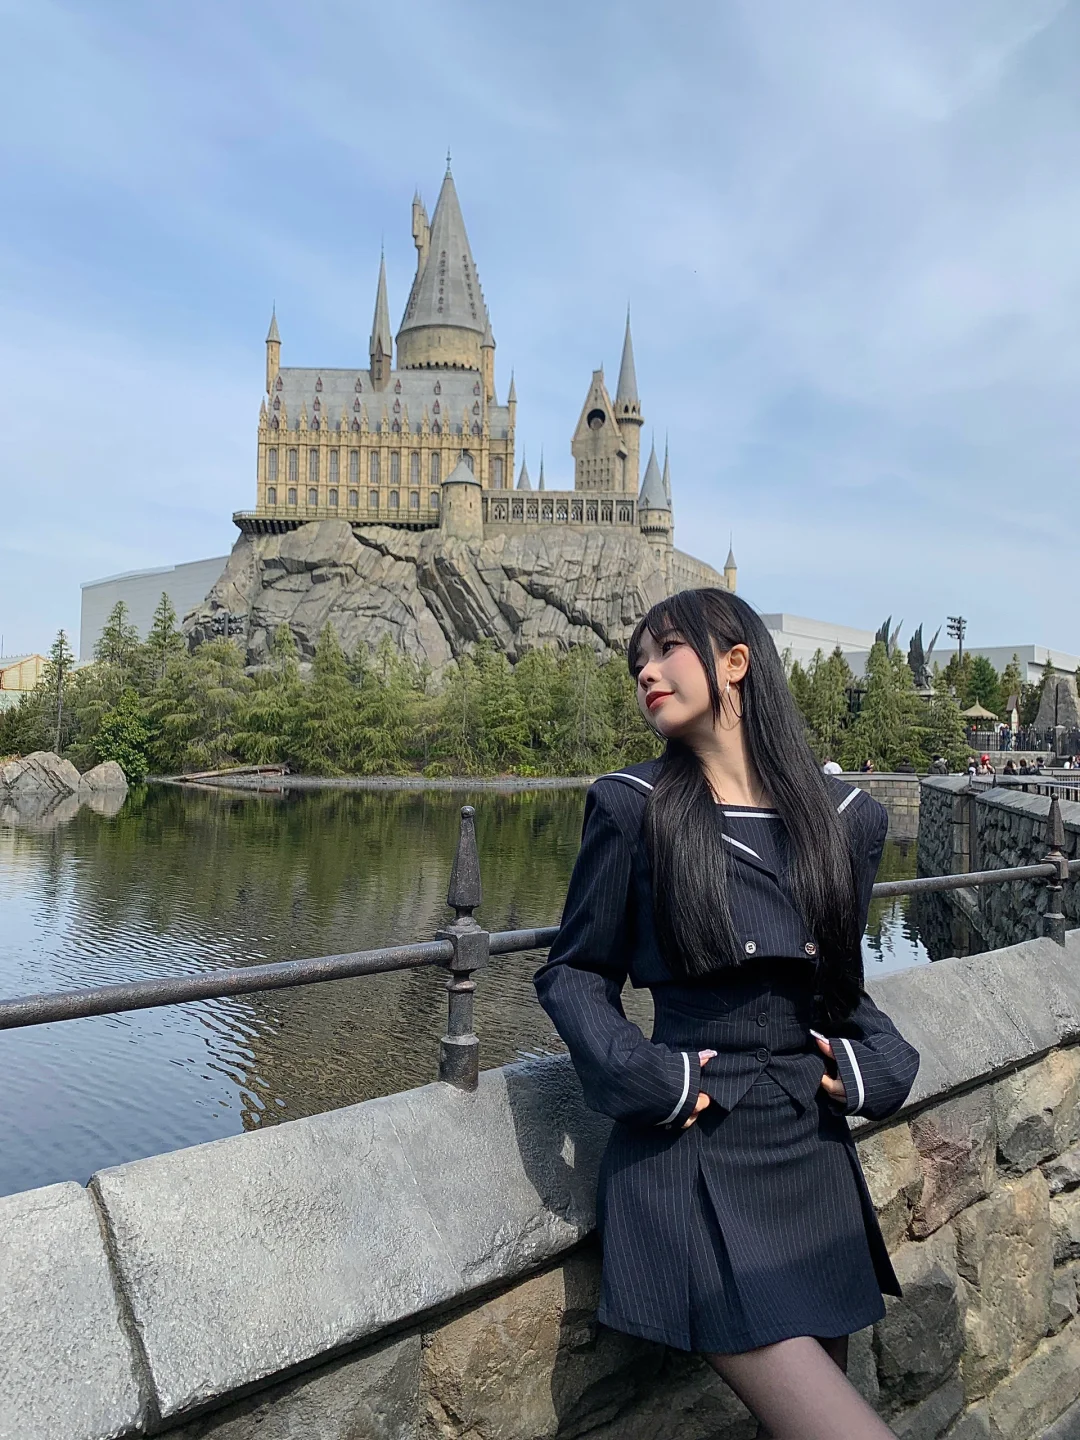 Osaka-Universal Studios Japan Osaka, recommend Harry Potter and the Forbidden Journey